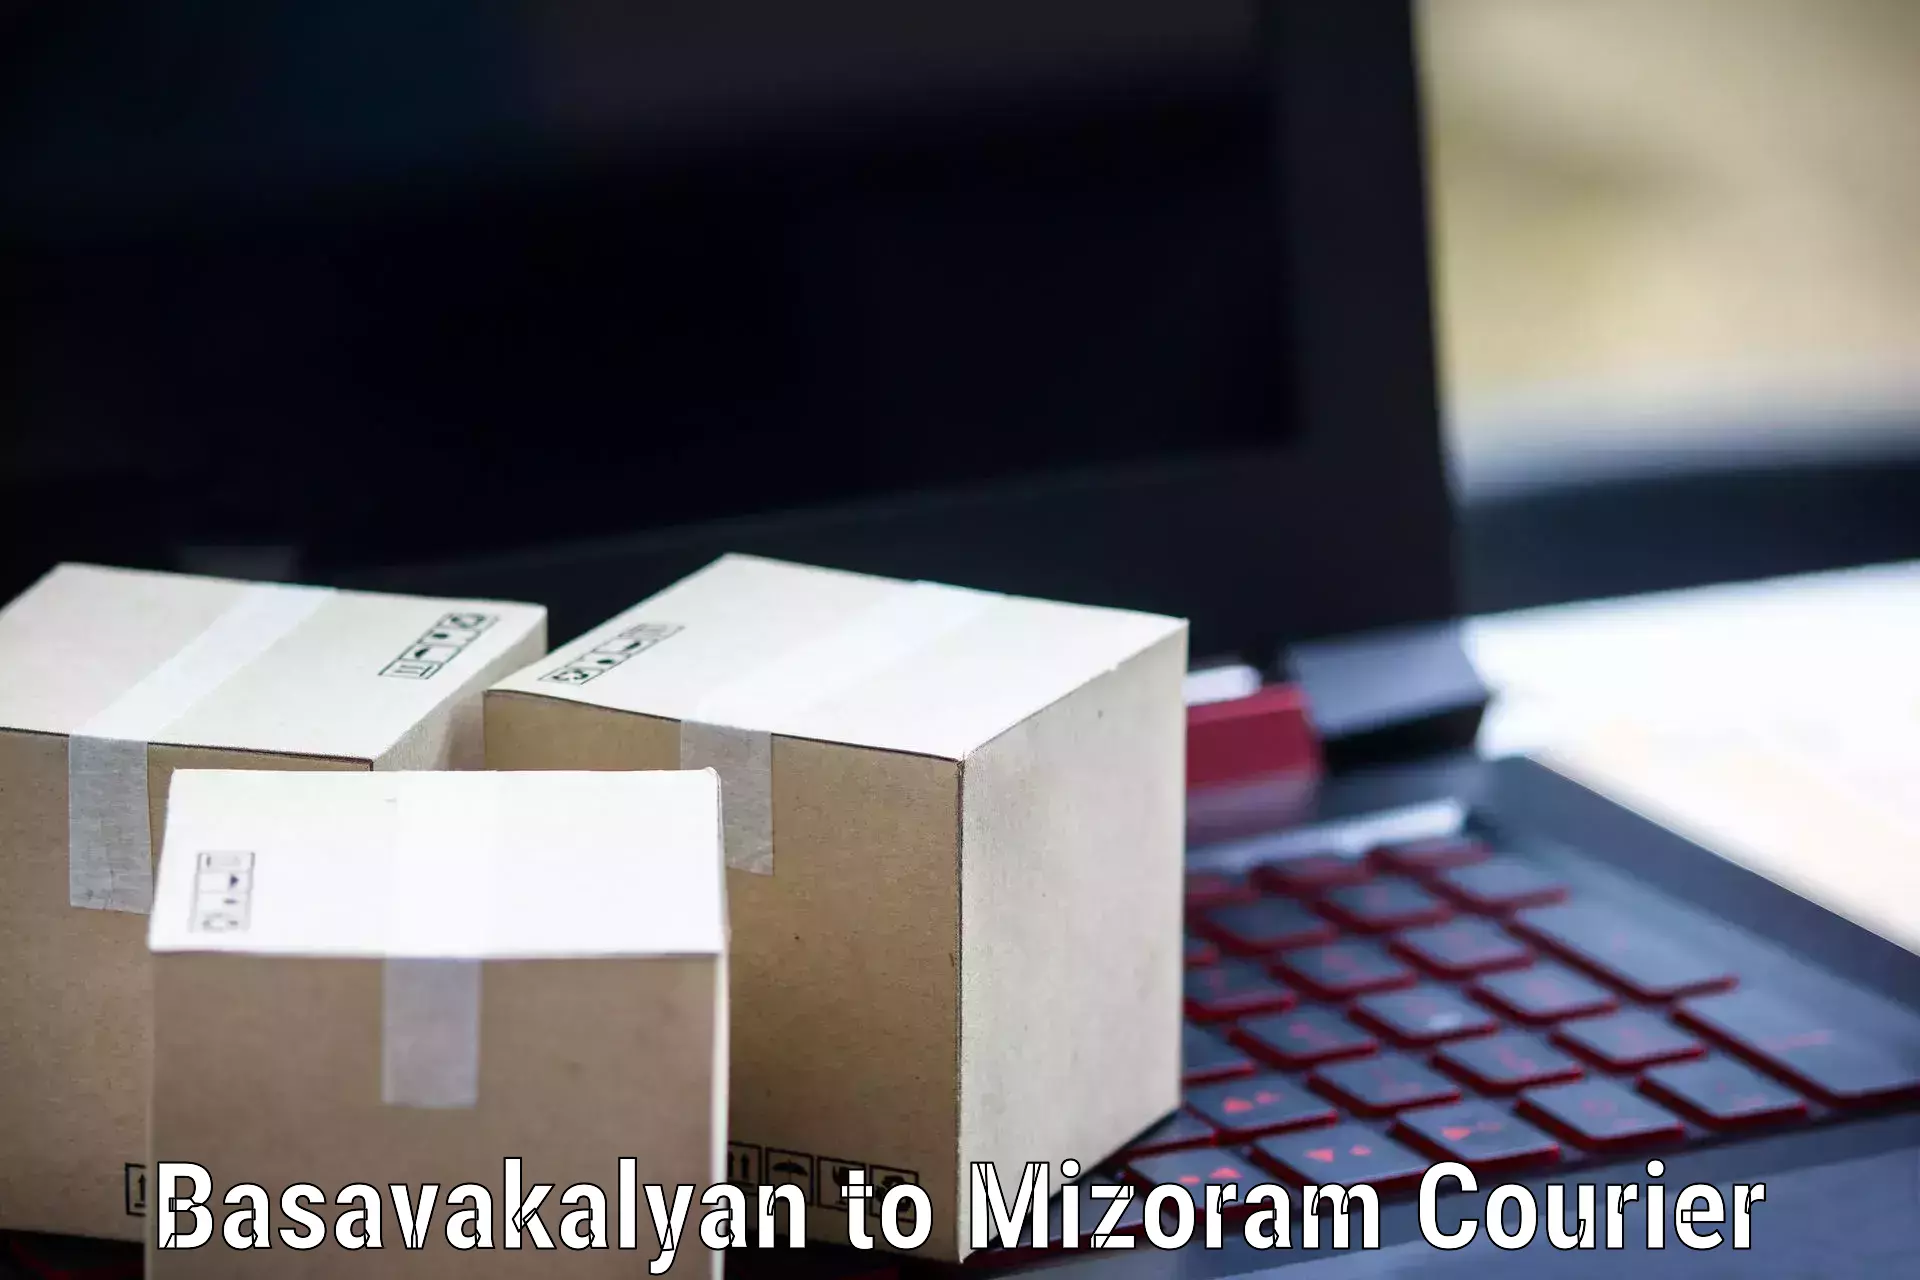 Express delivery capabilities Basavakalyan to Aizawl